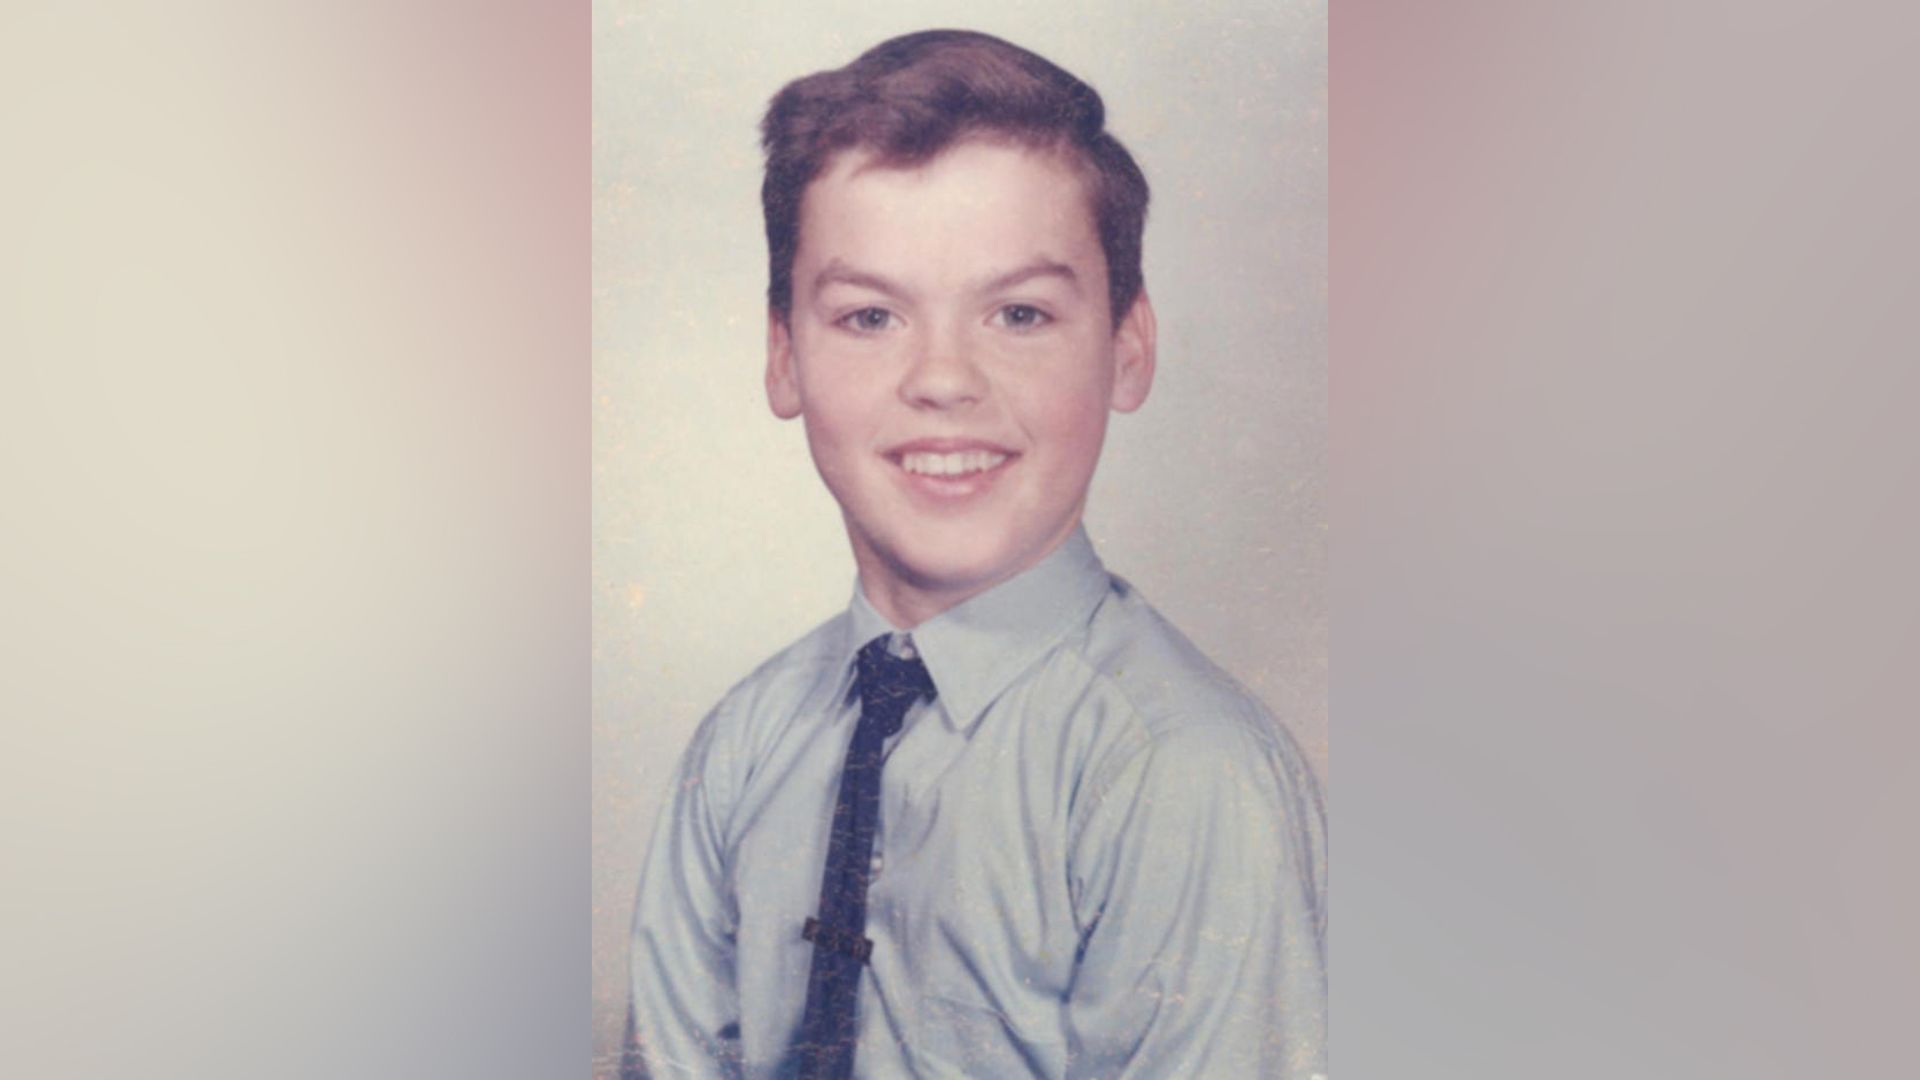 Michael Keaton as a child